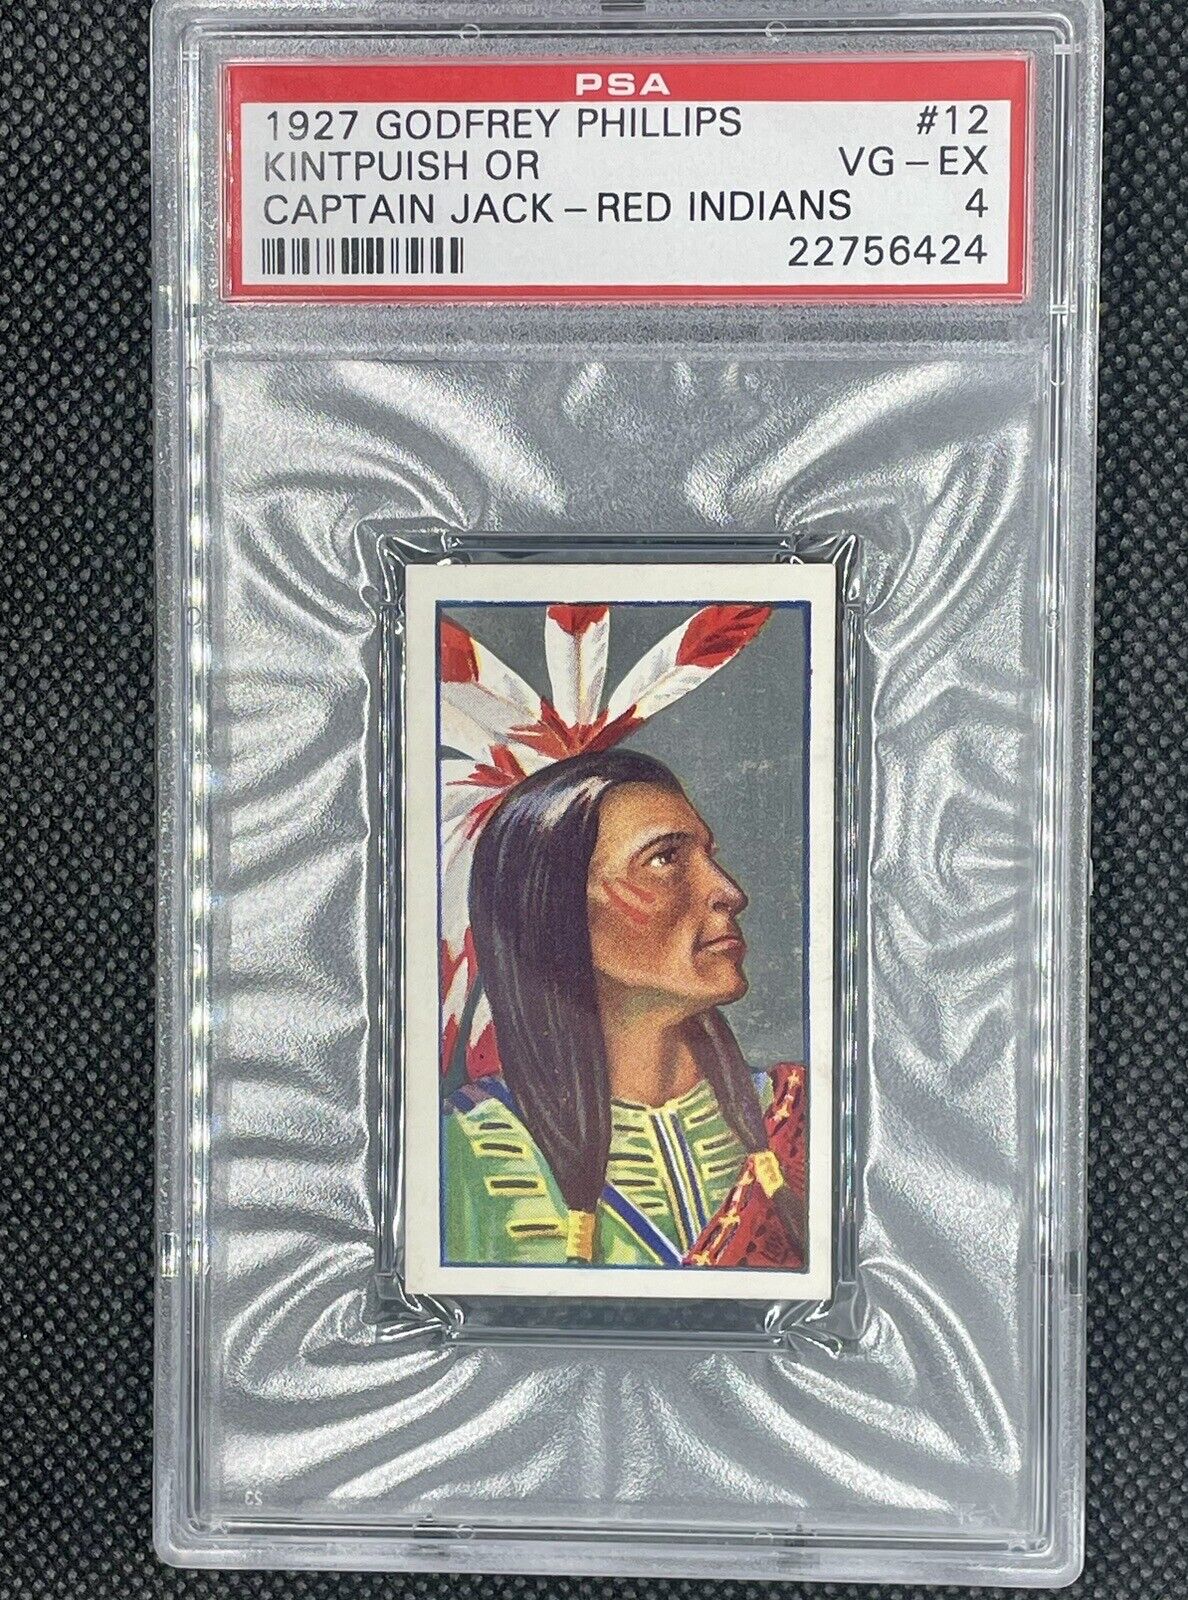 1927 Godfrey Phillips Red Indians #12 KINTPUISH OR CAPTAIN JACK - PSA 4